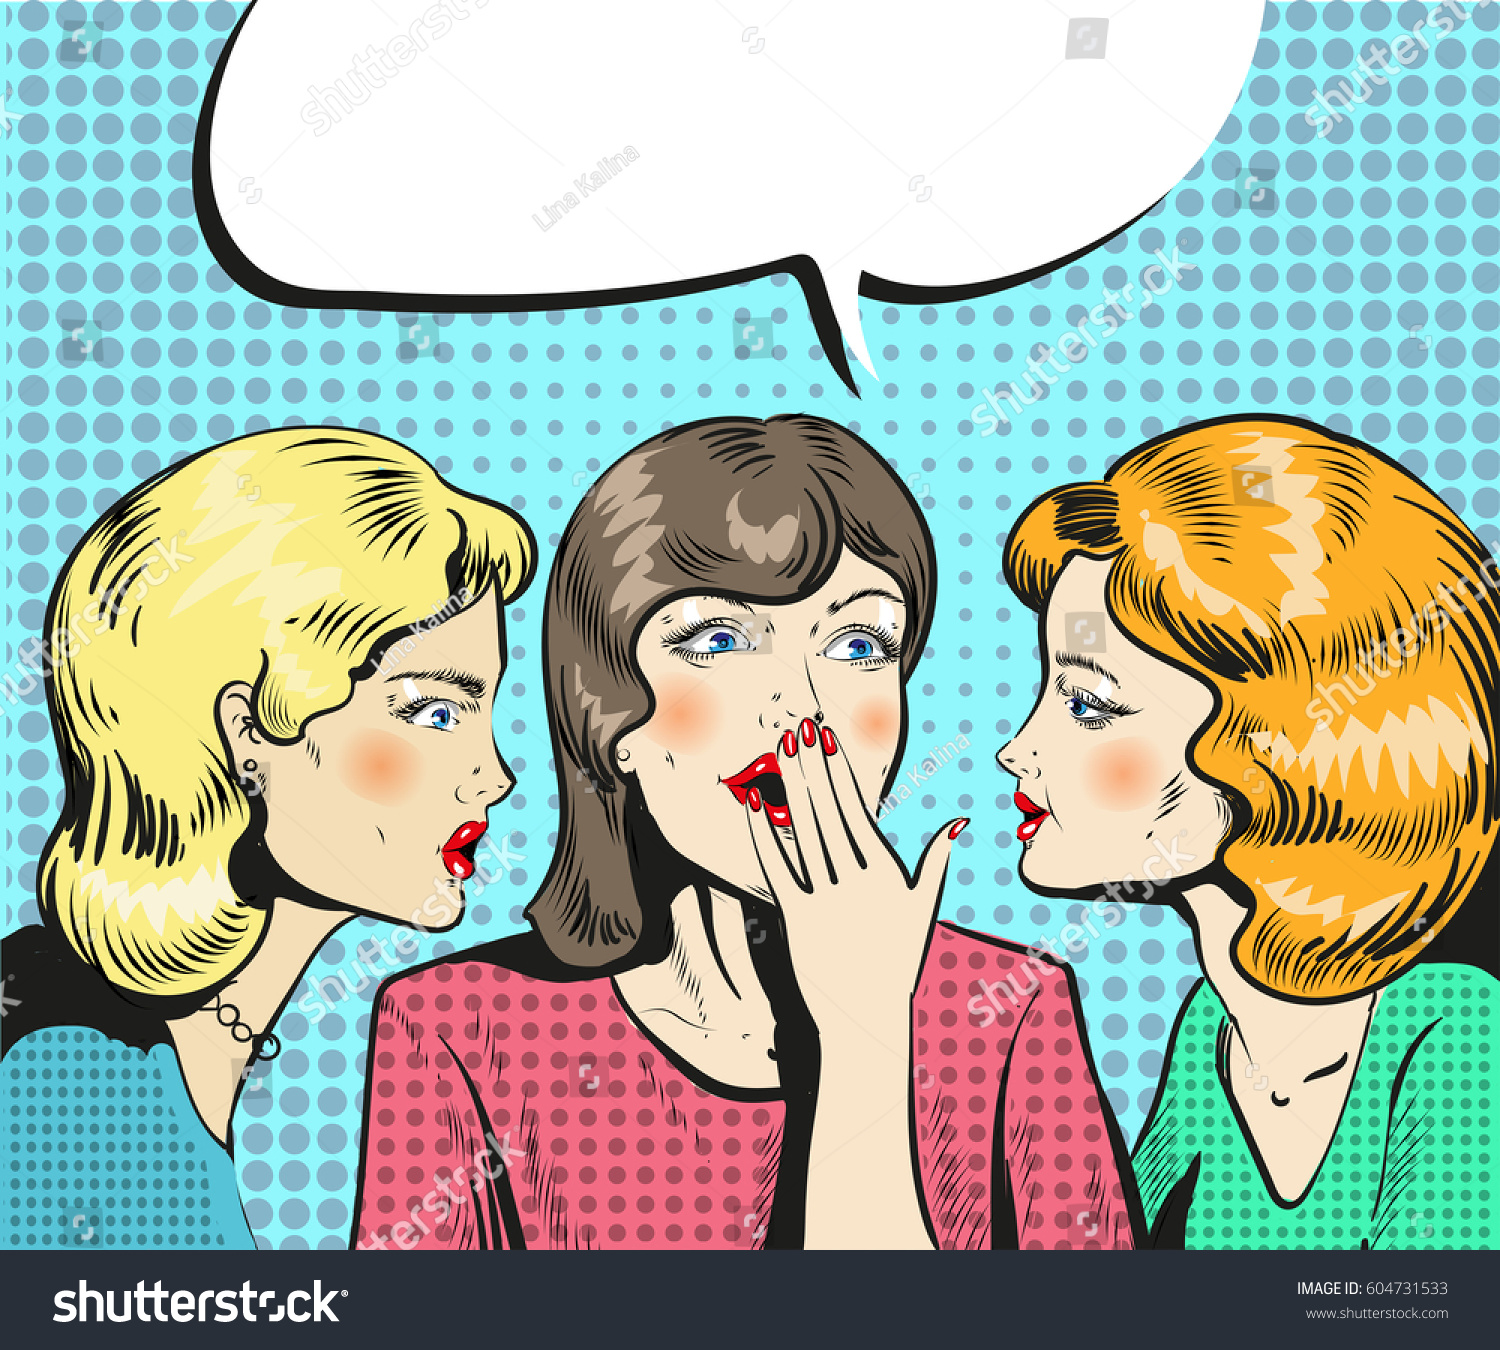 Women Talking Whispering Pop Art Retro Stock Vector Royalty Free 604731533 Shutterstock